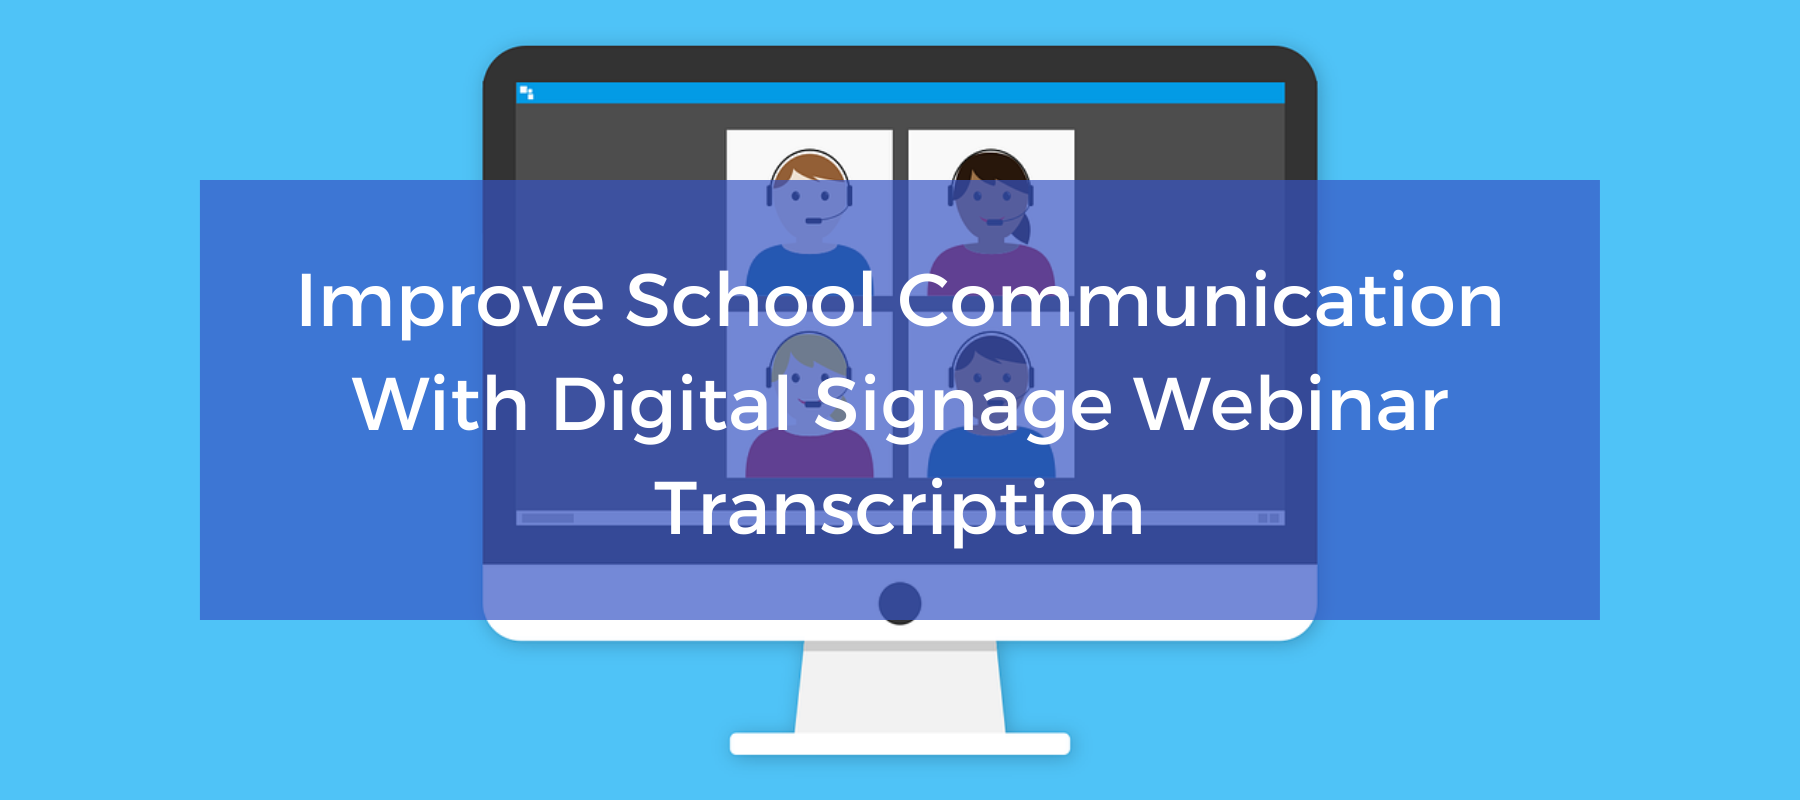 improve school communication with digital signage webinar transcription featured.